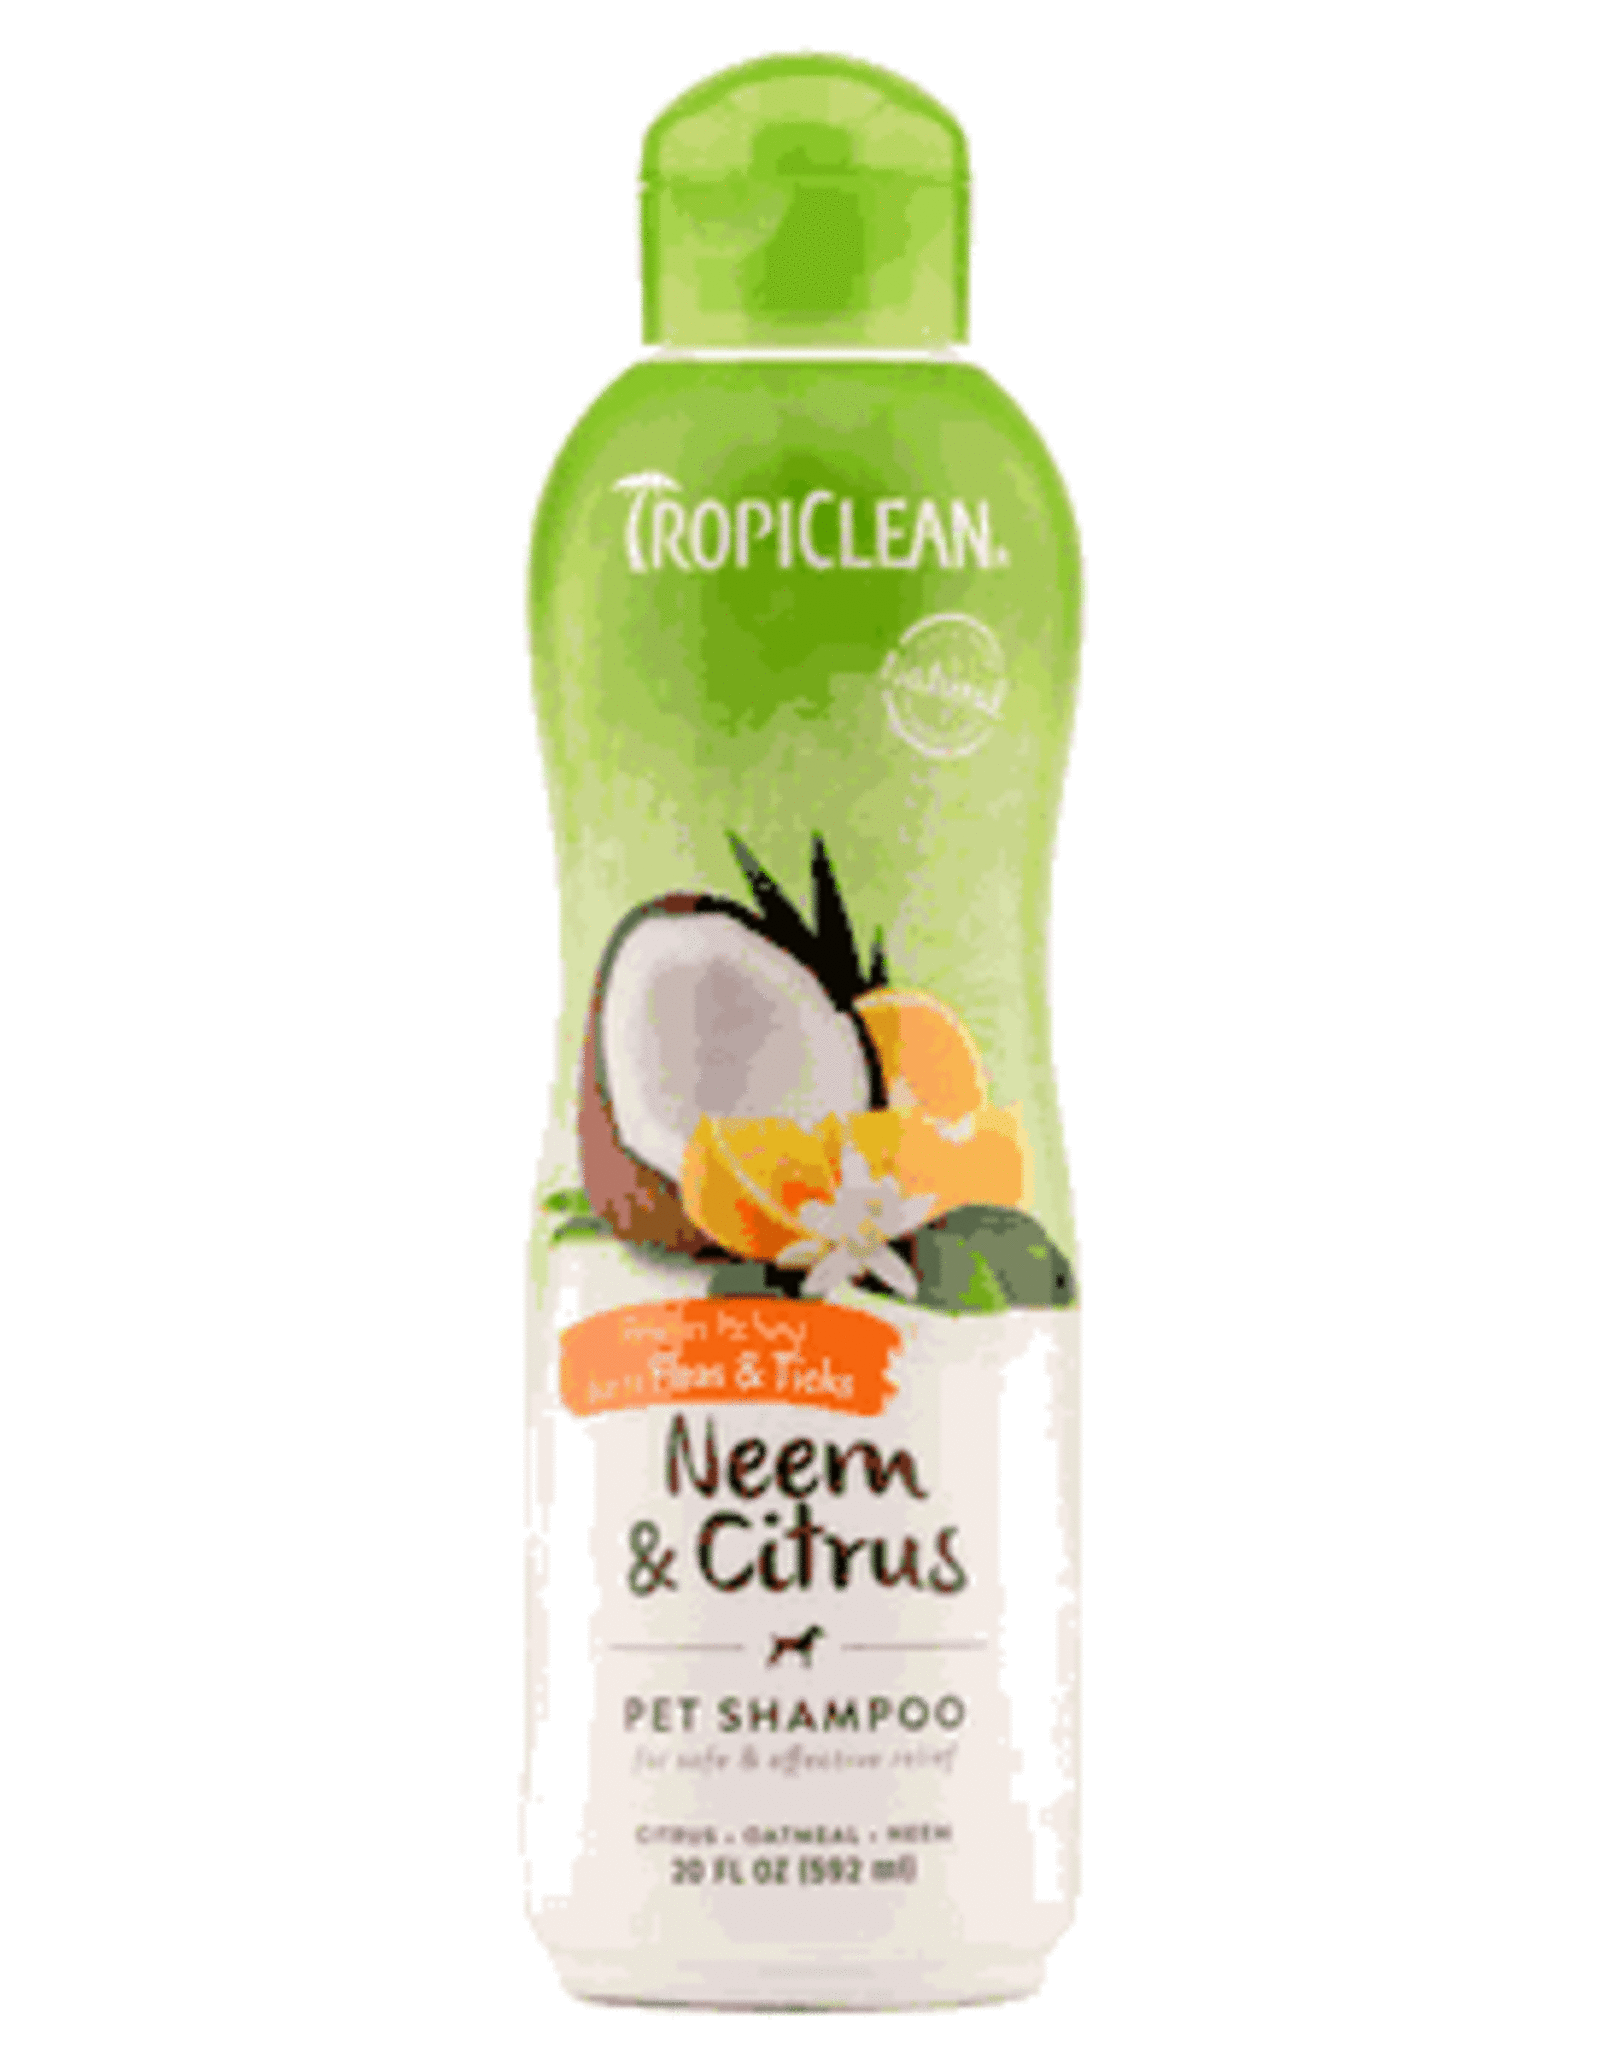 TropiClean Neem Citrus Shampoo Dog, 20 oz